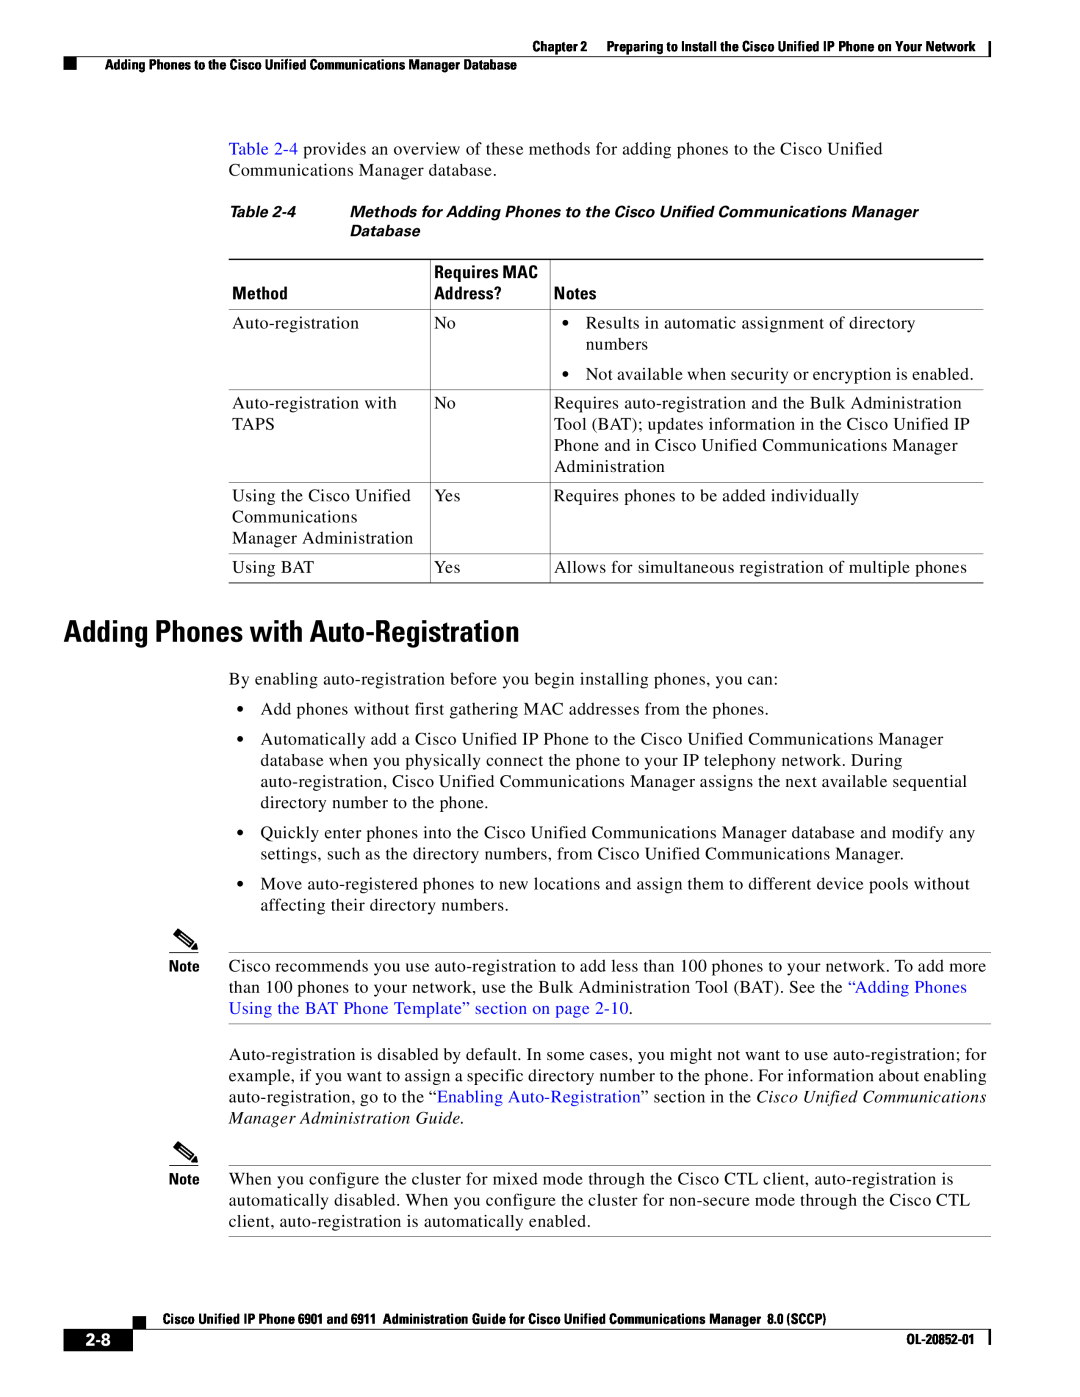 Cisco Systems 691 manual Adding Phones with Auto-Registration, Method, Address? 